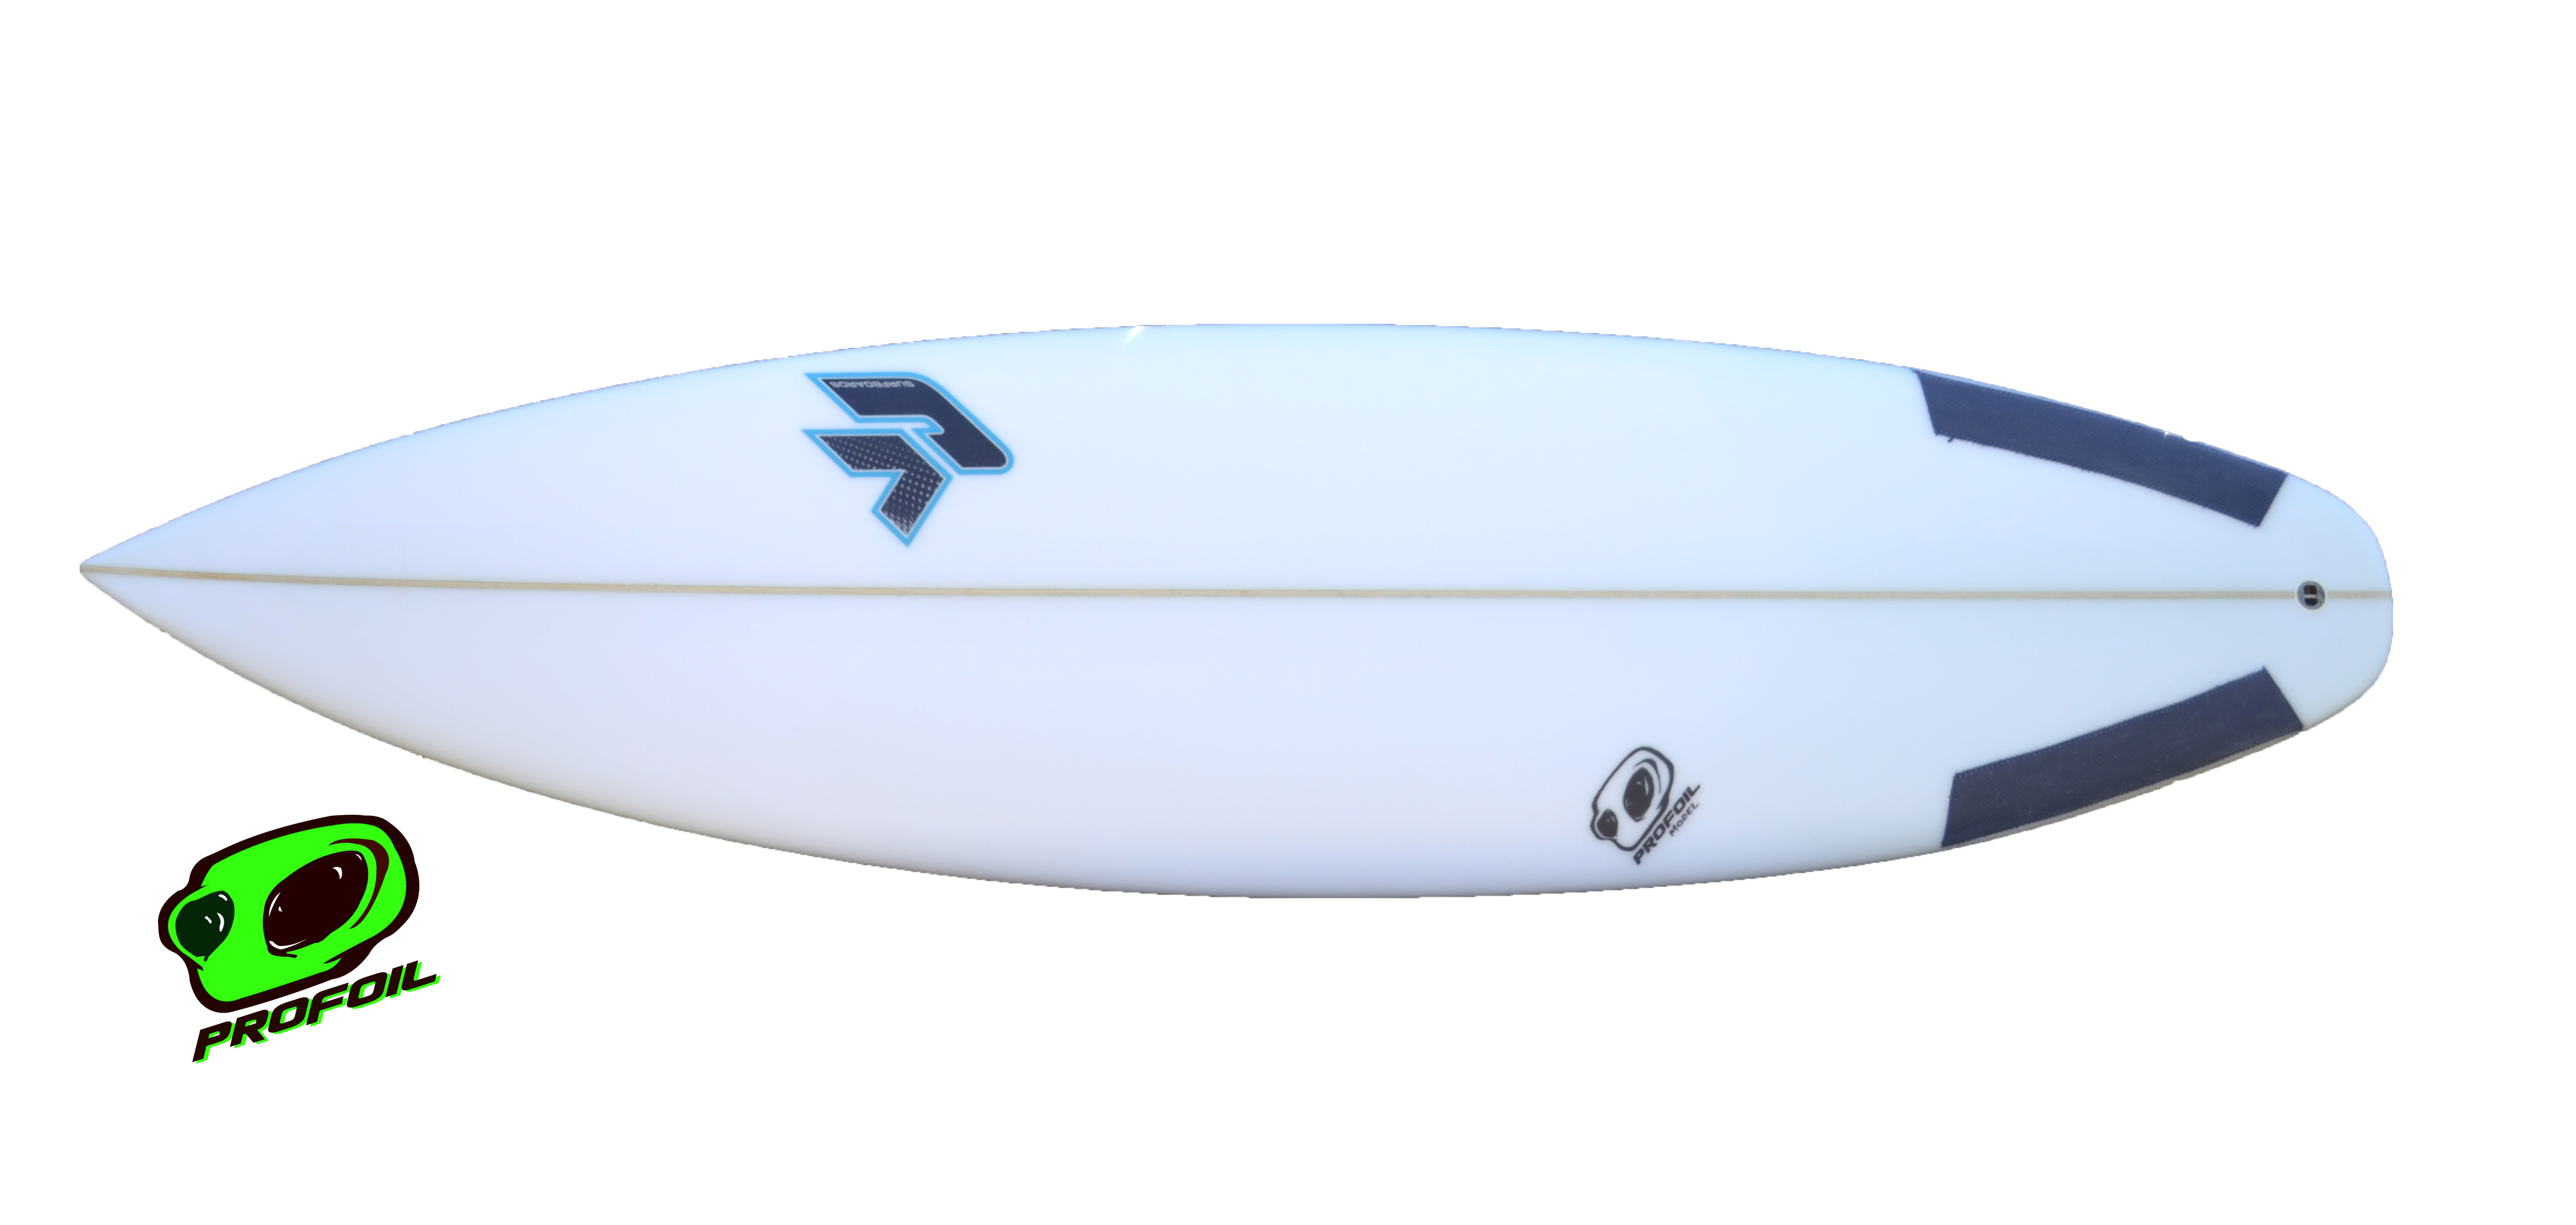 Profoil-Model -Surfboard